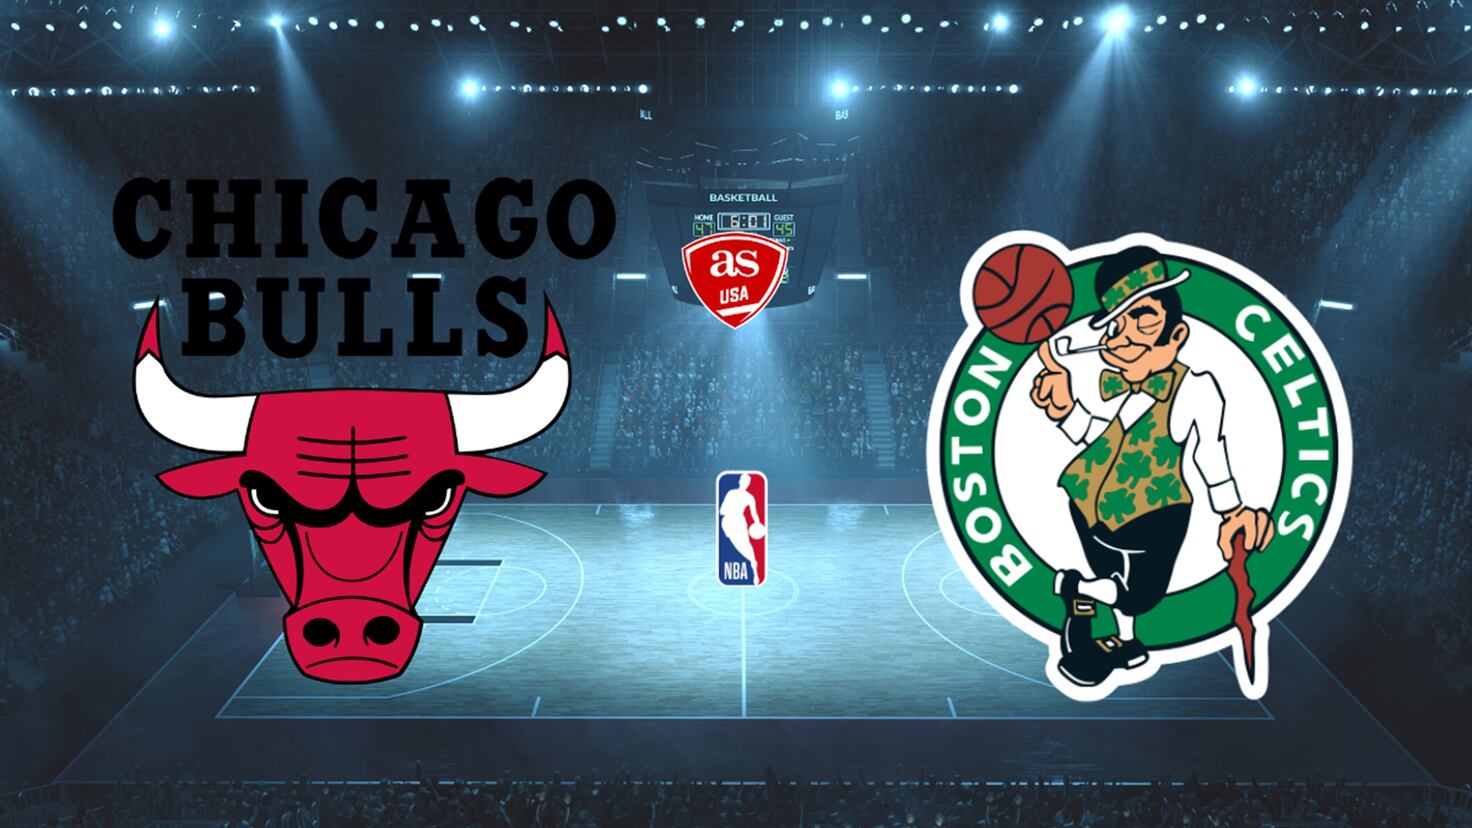 Chicago Bulls (@chicagobulls) • Instagram photos and videos